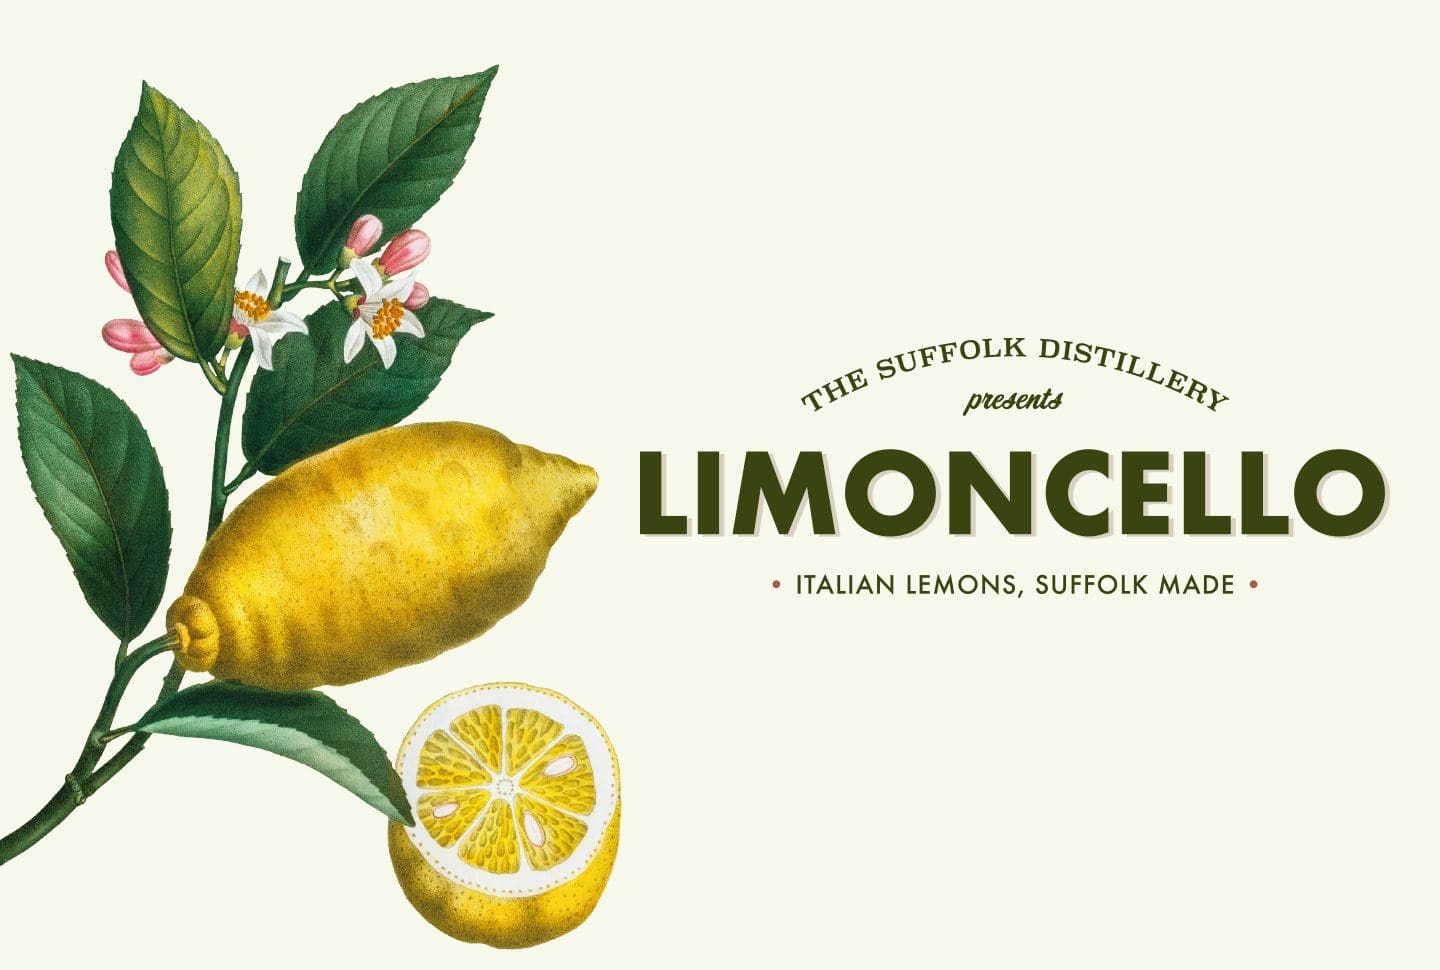 The Suffolk Distillery Limoncello - Brand and Label Design